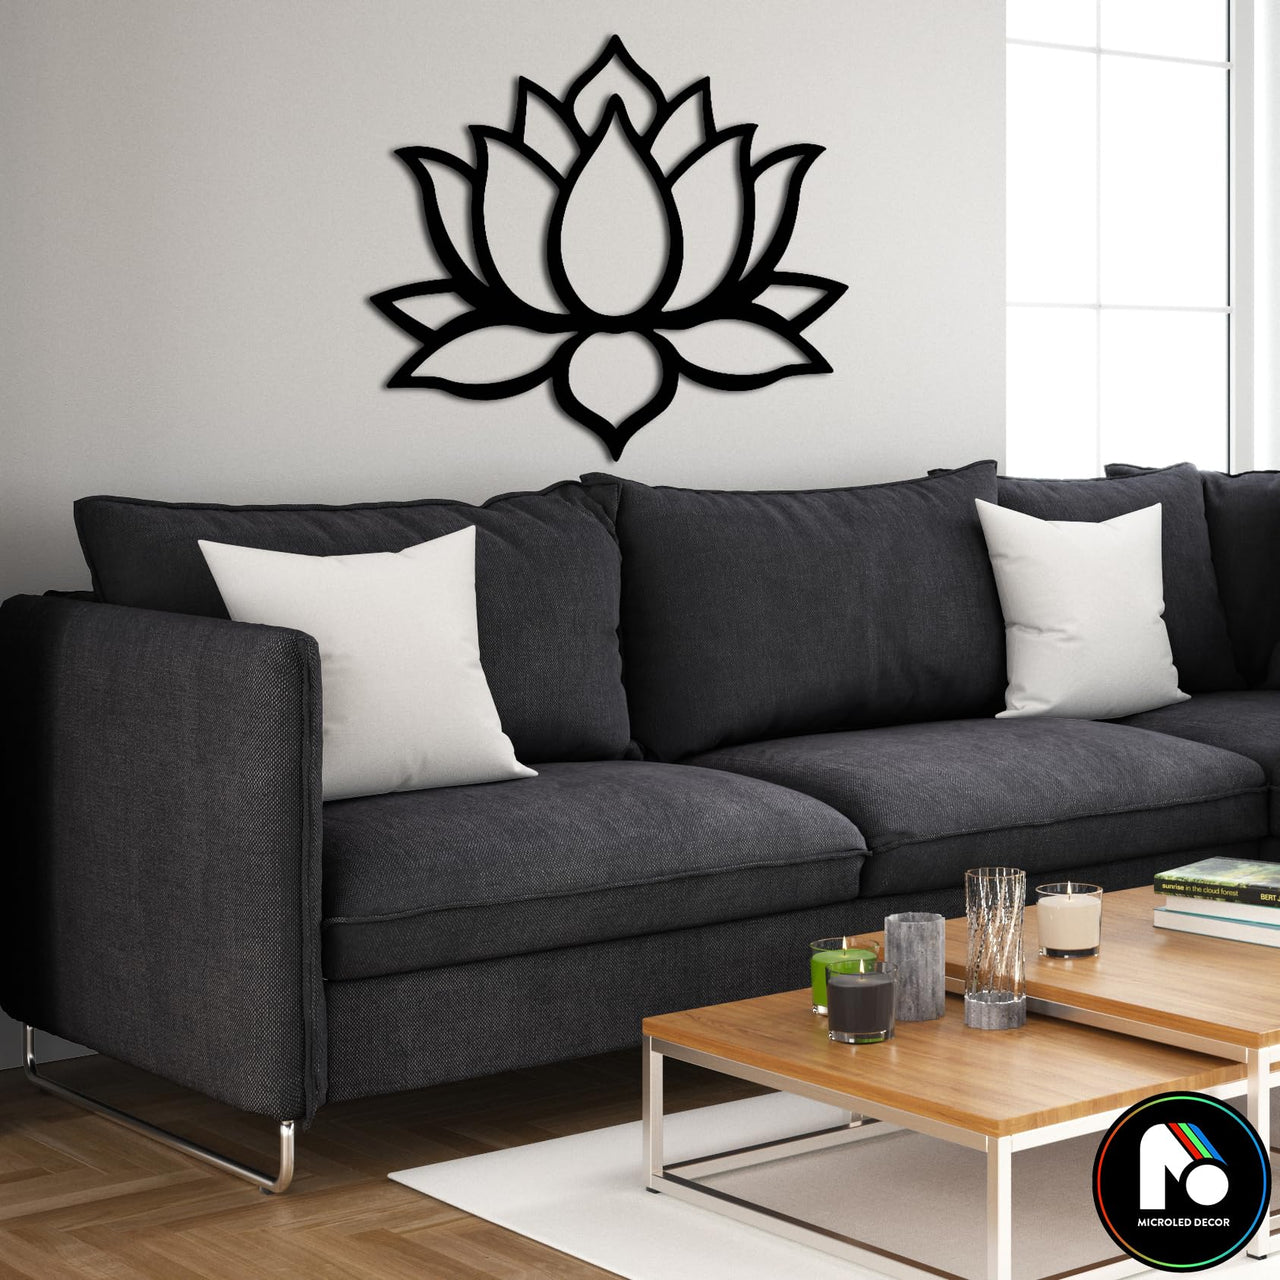 Flower Lotus Wall Art